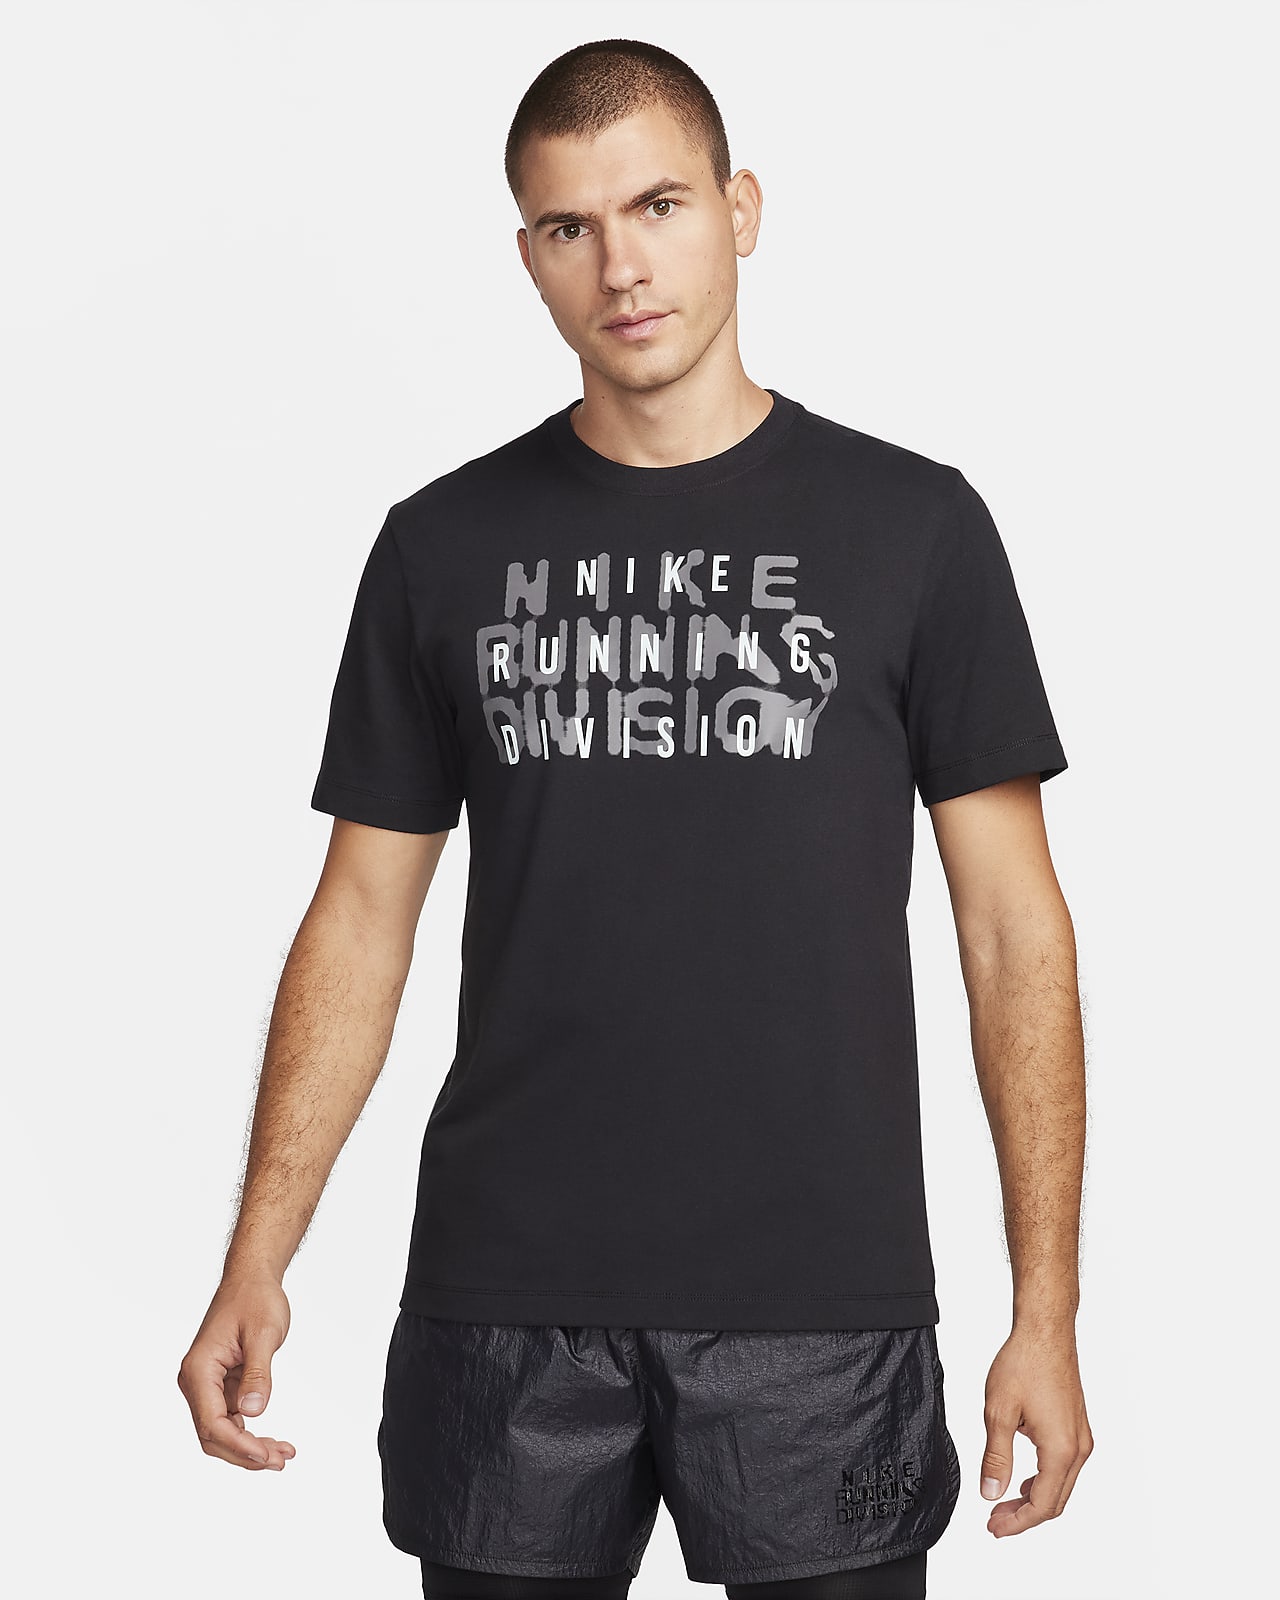 Nike Dri-FIT Running Division Men's T-Shirt